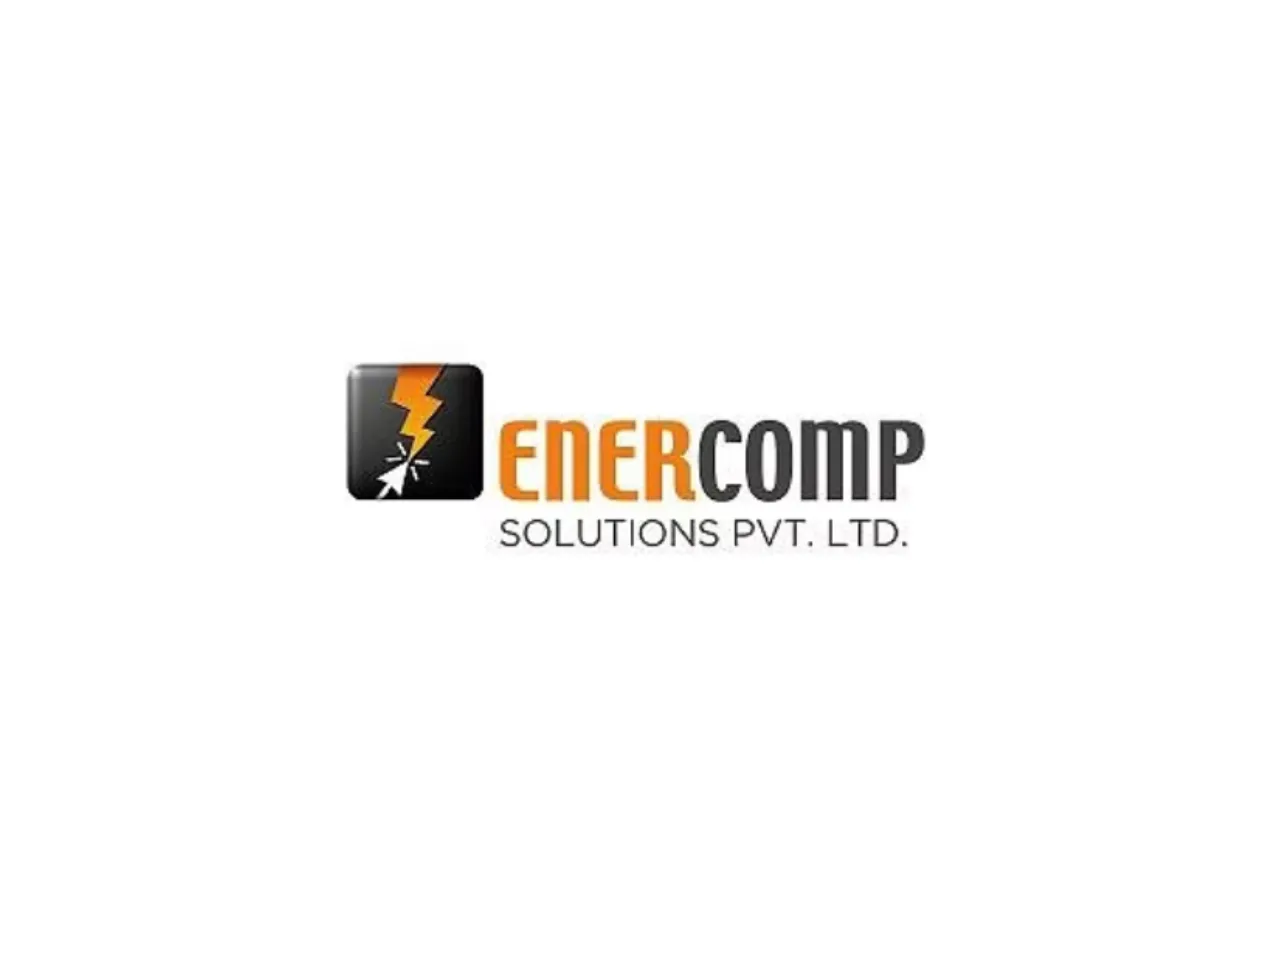 enercomp logo